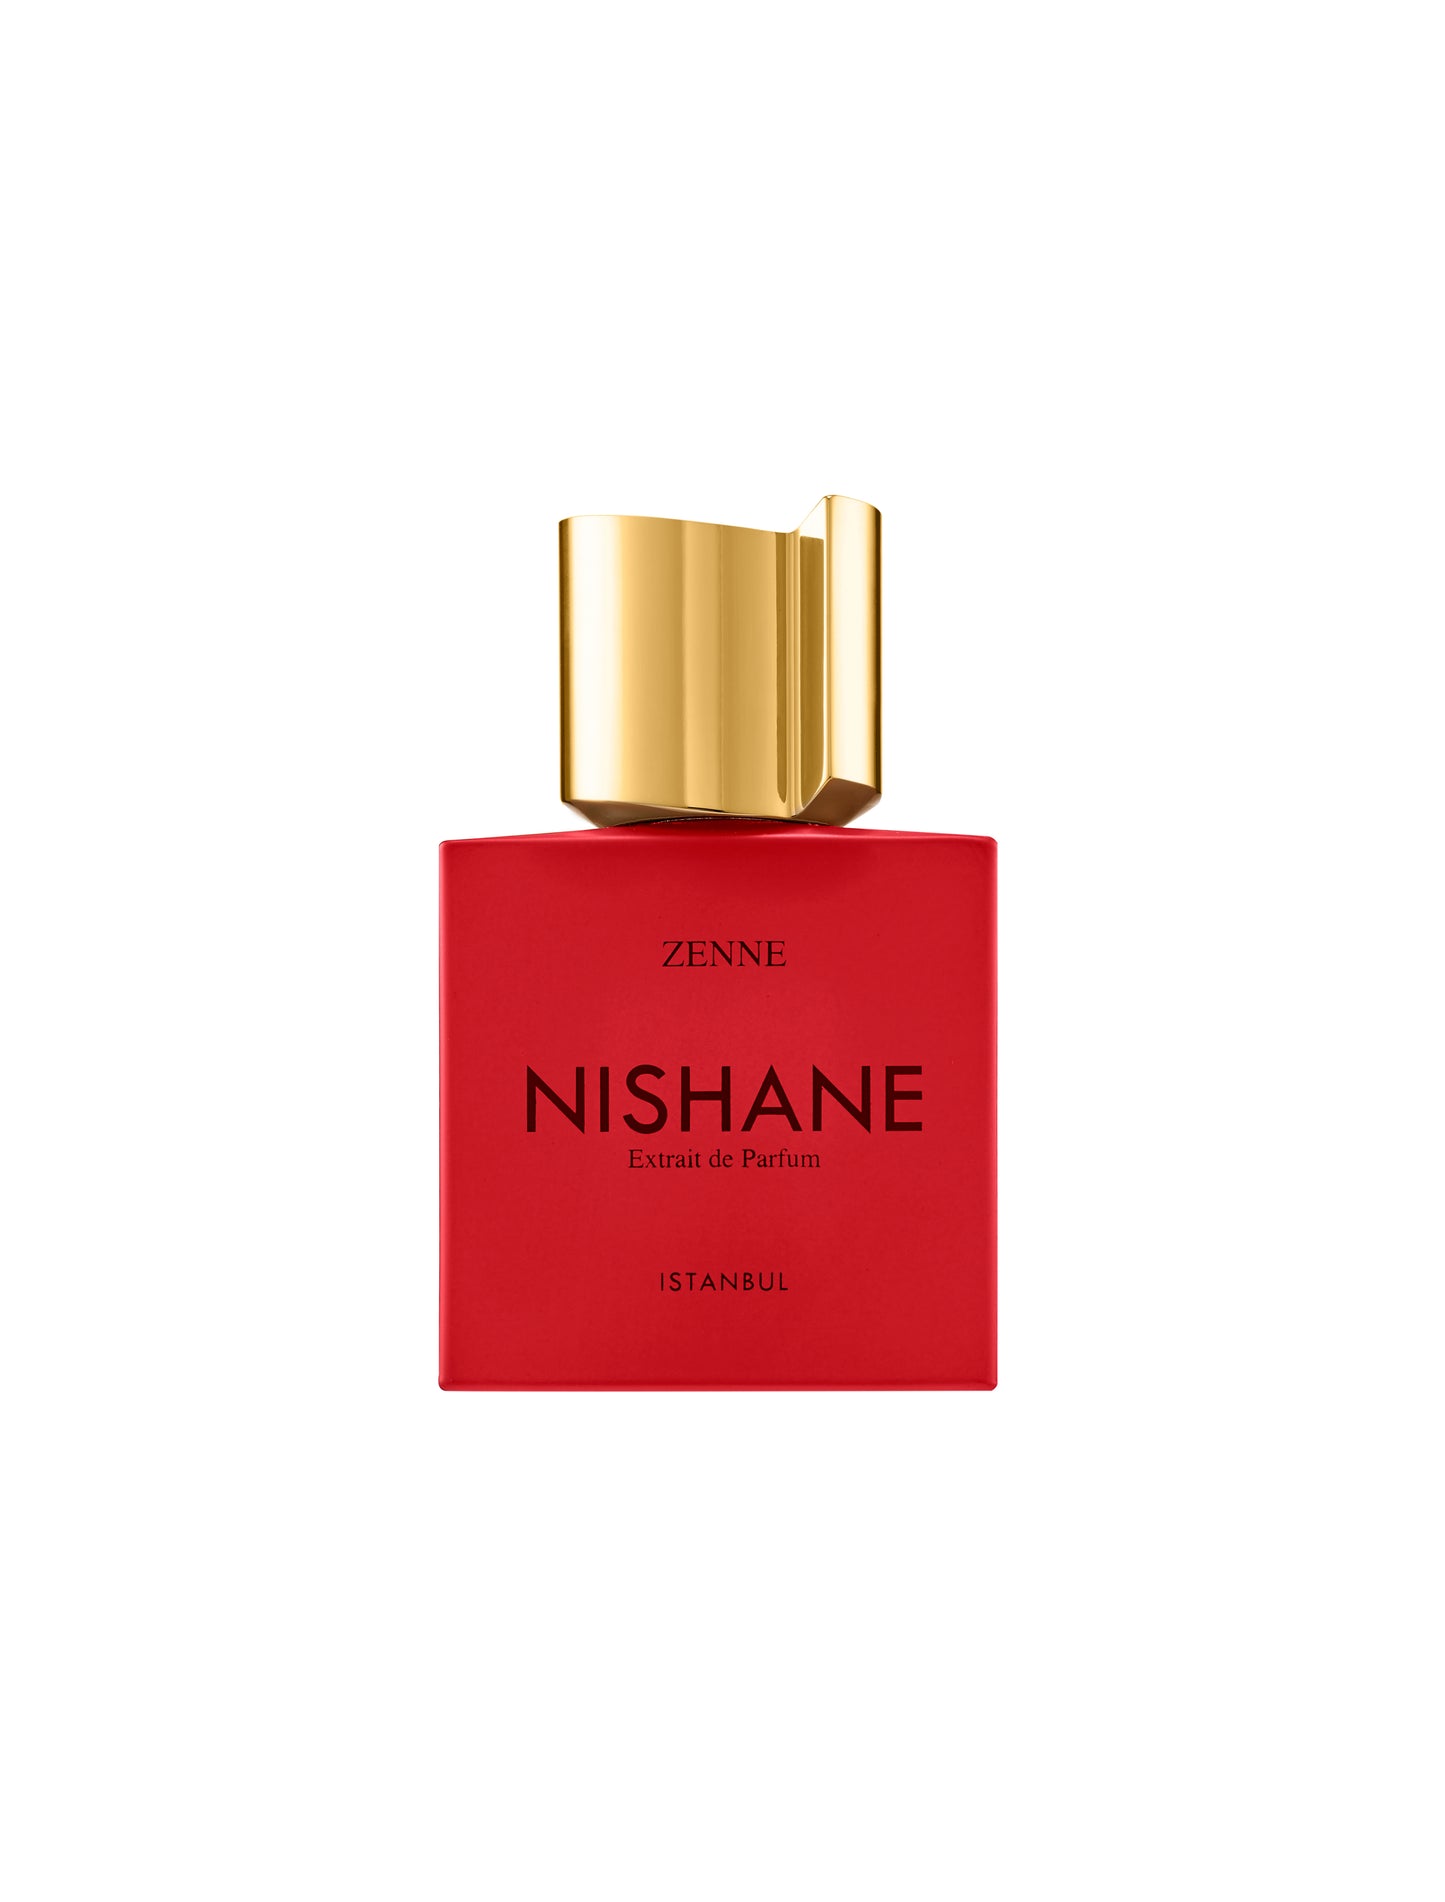 Zenne Nishane Extrait de Parfum 50ml